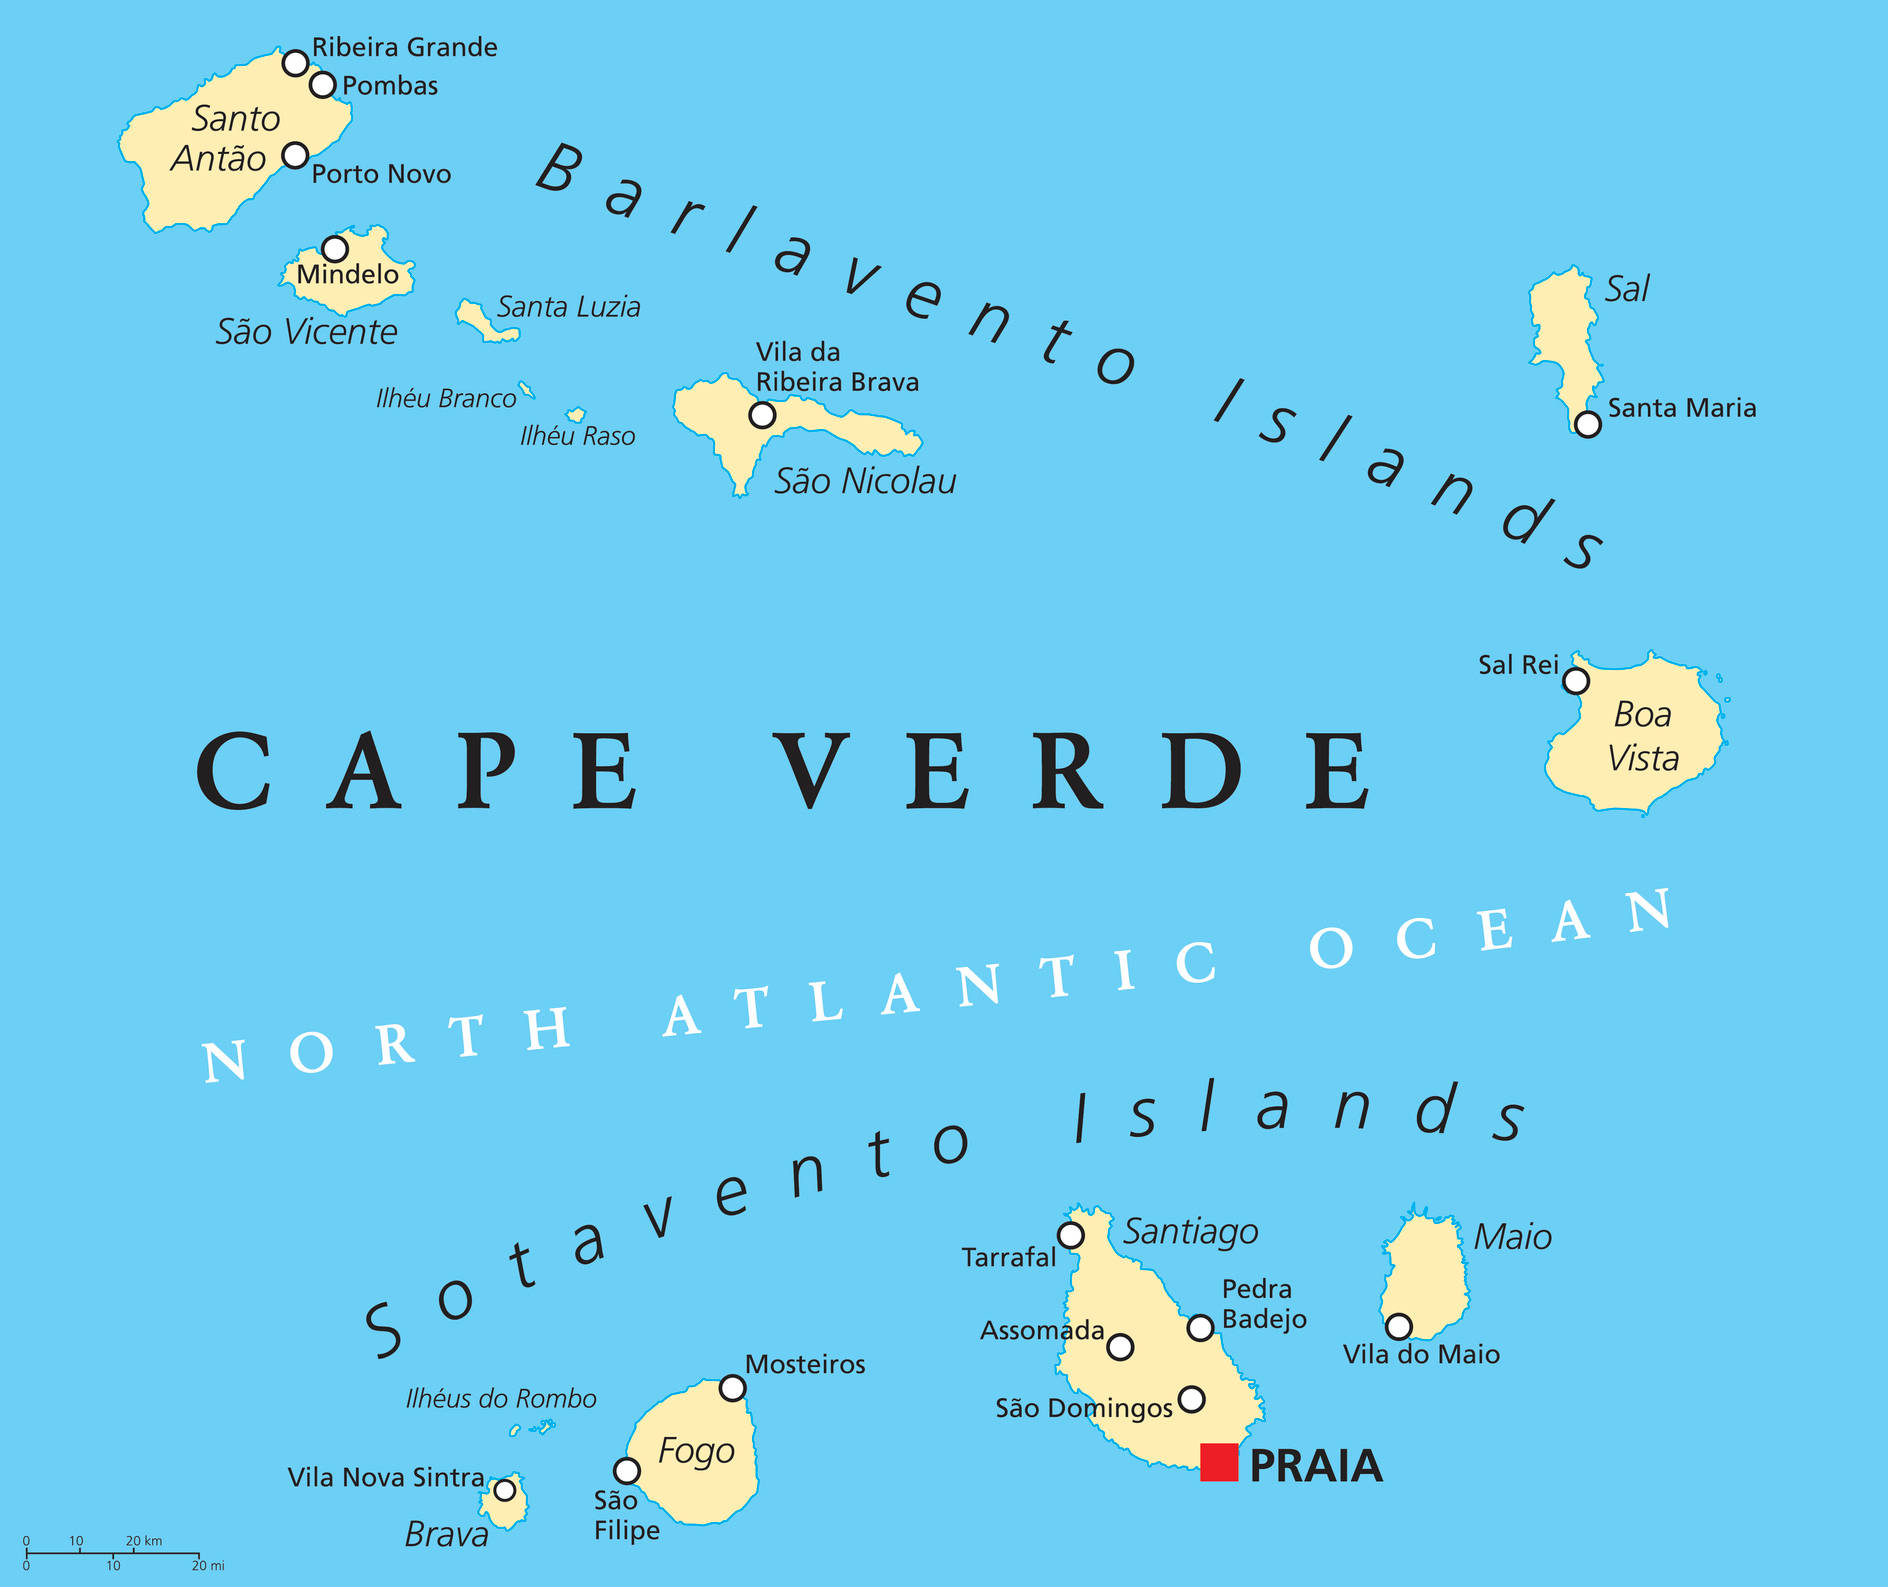 Kap Verde 1888 X 1587 Wallpaper